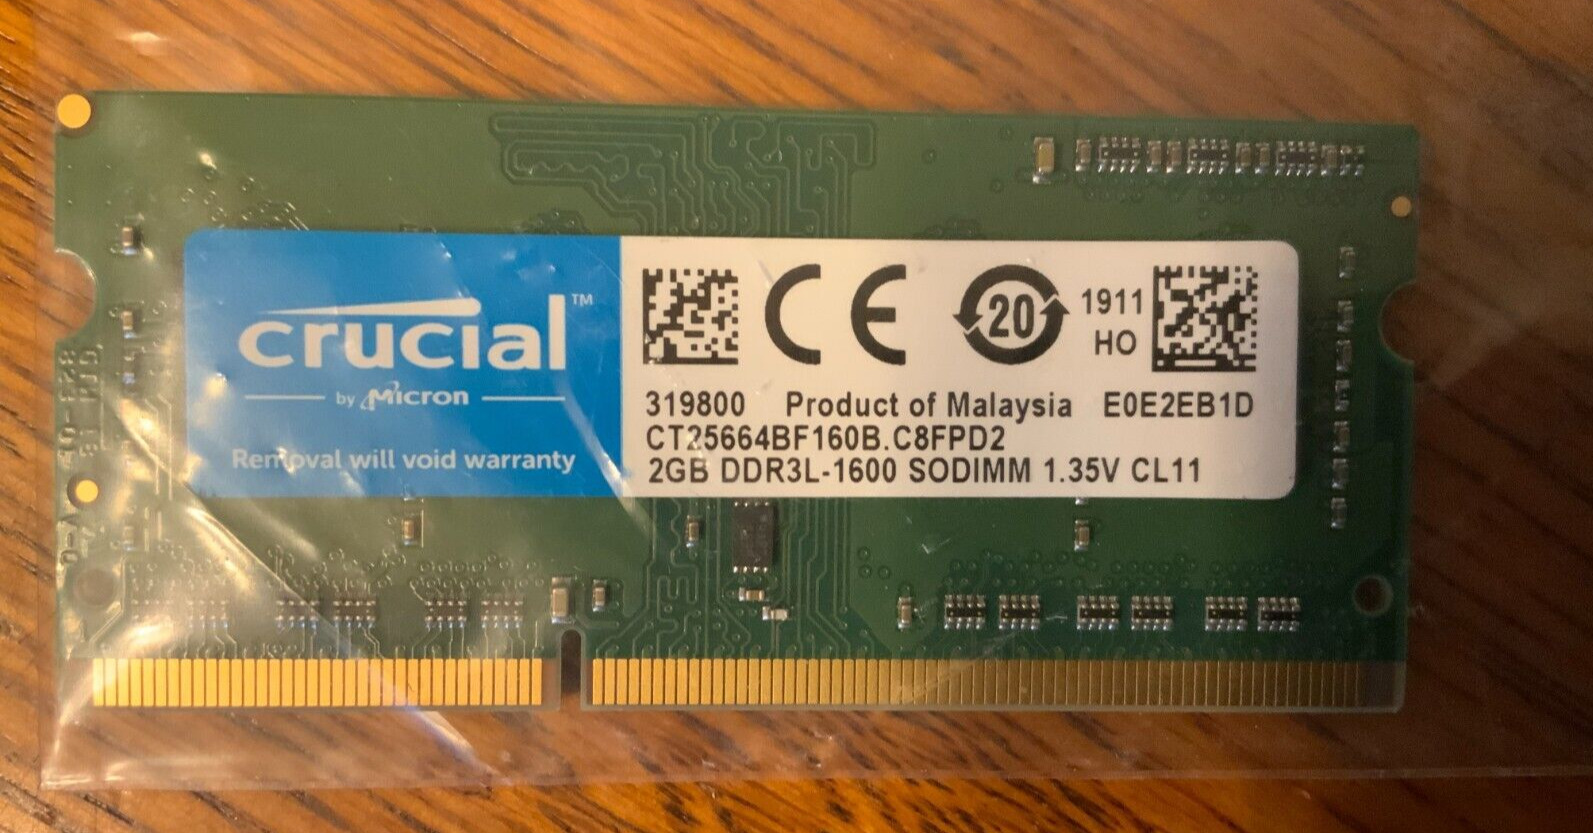 Crucial by Micron 2GB, 2X4 DDR3L - 1600 SODIMM 1.35V CL11, CT25664BF160B.C8FPD2